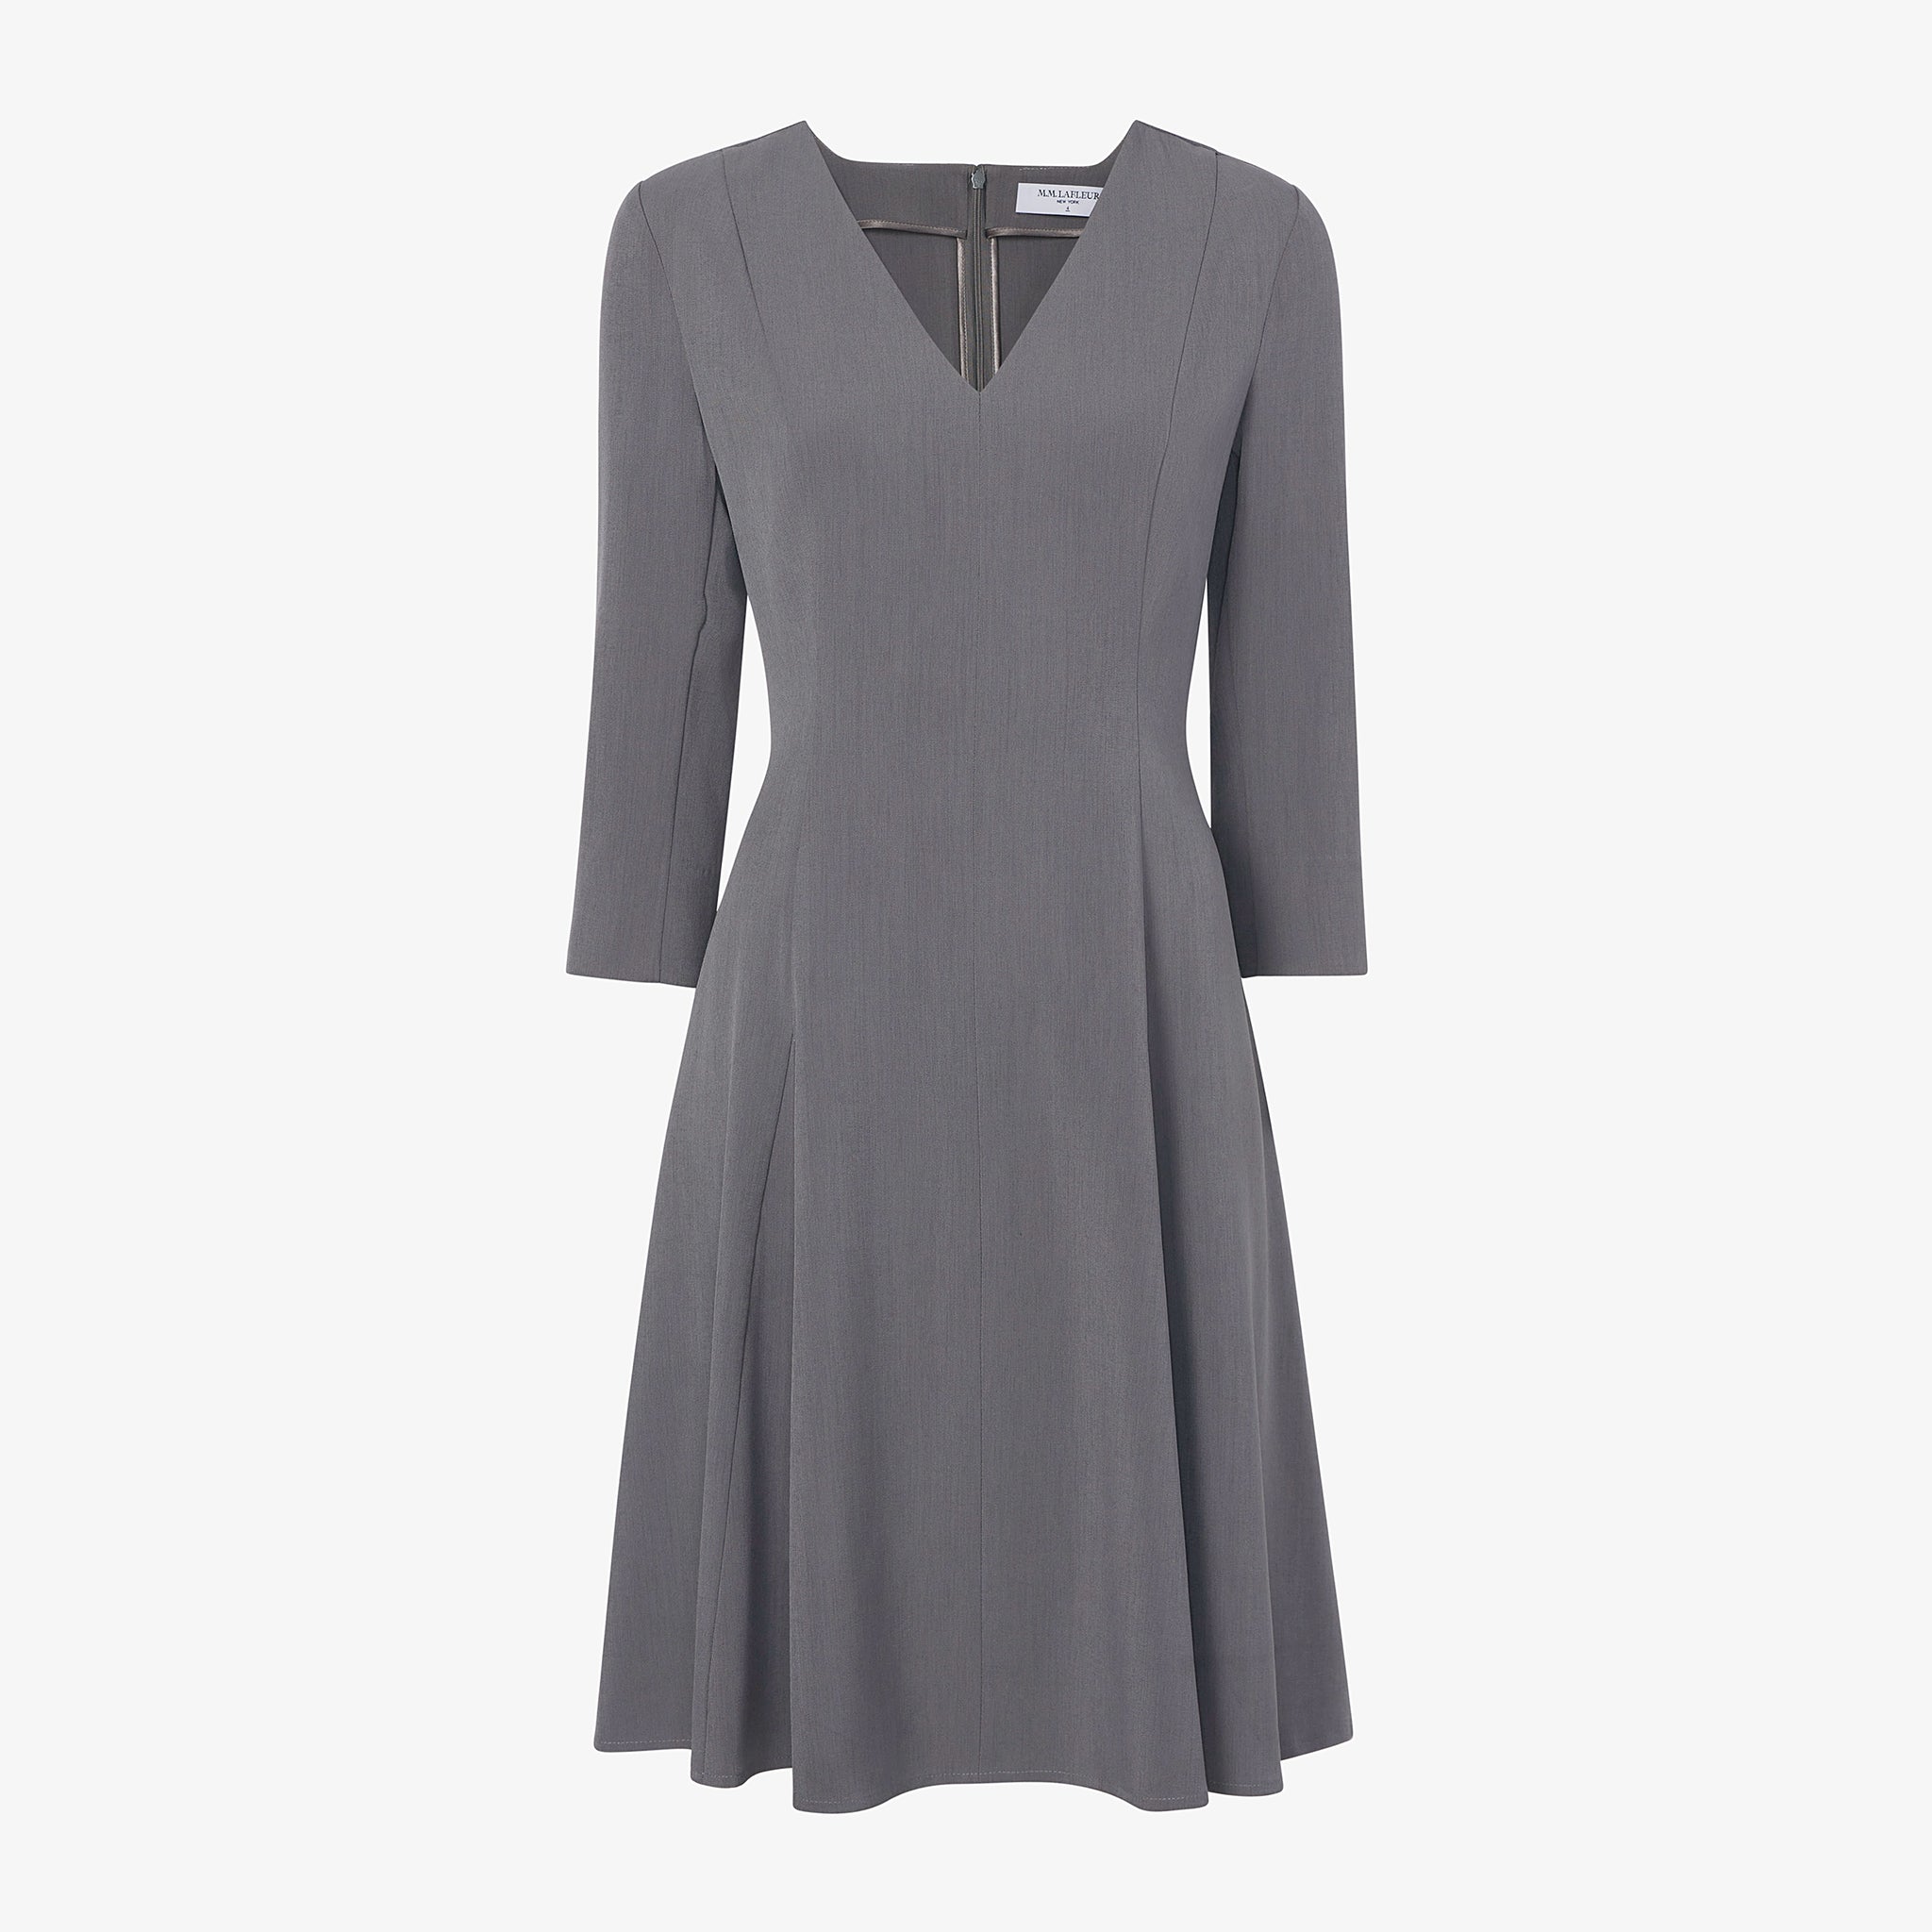 Packshot image of the Erica Dress in Steel Gray